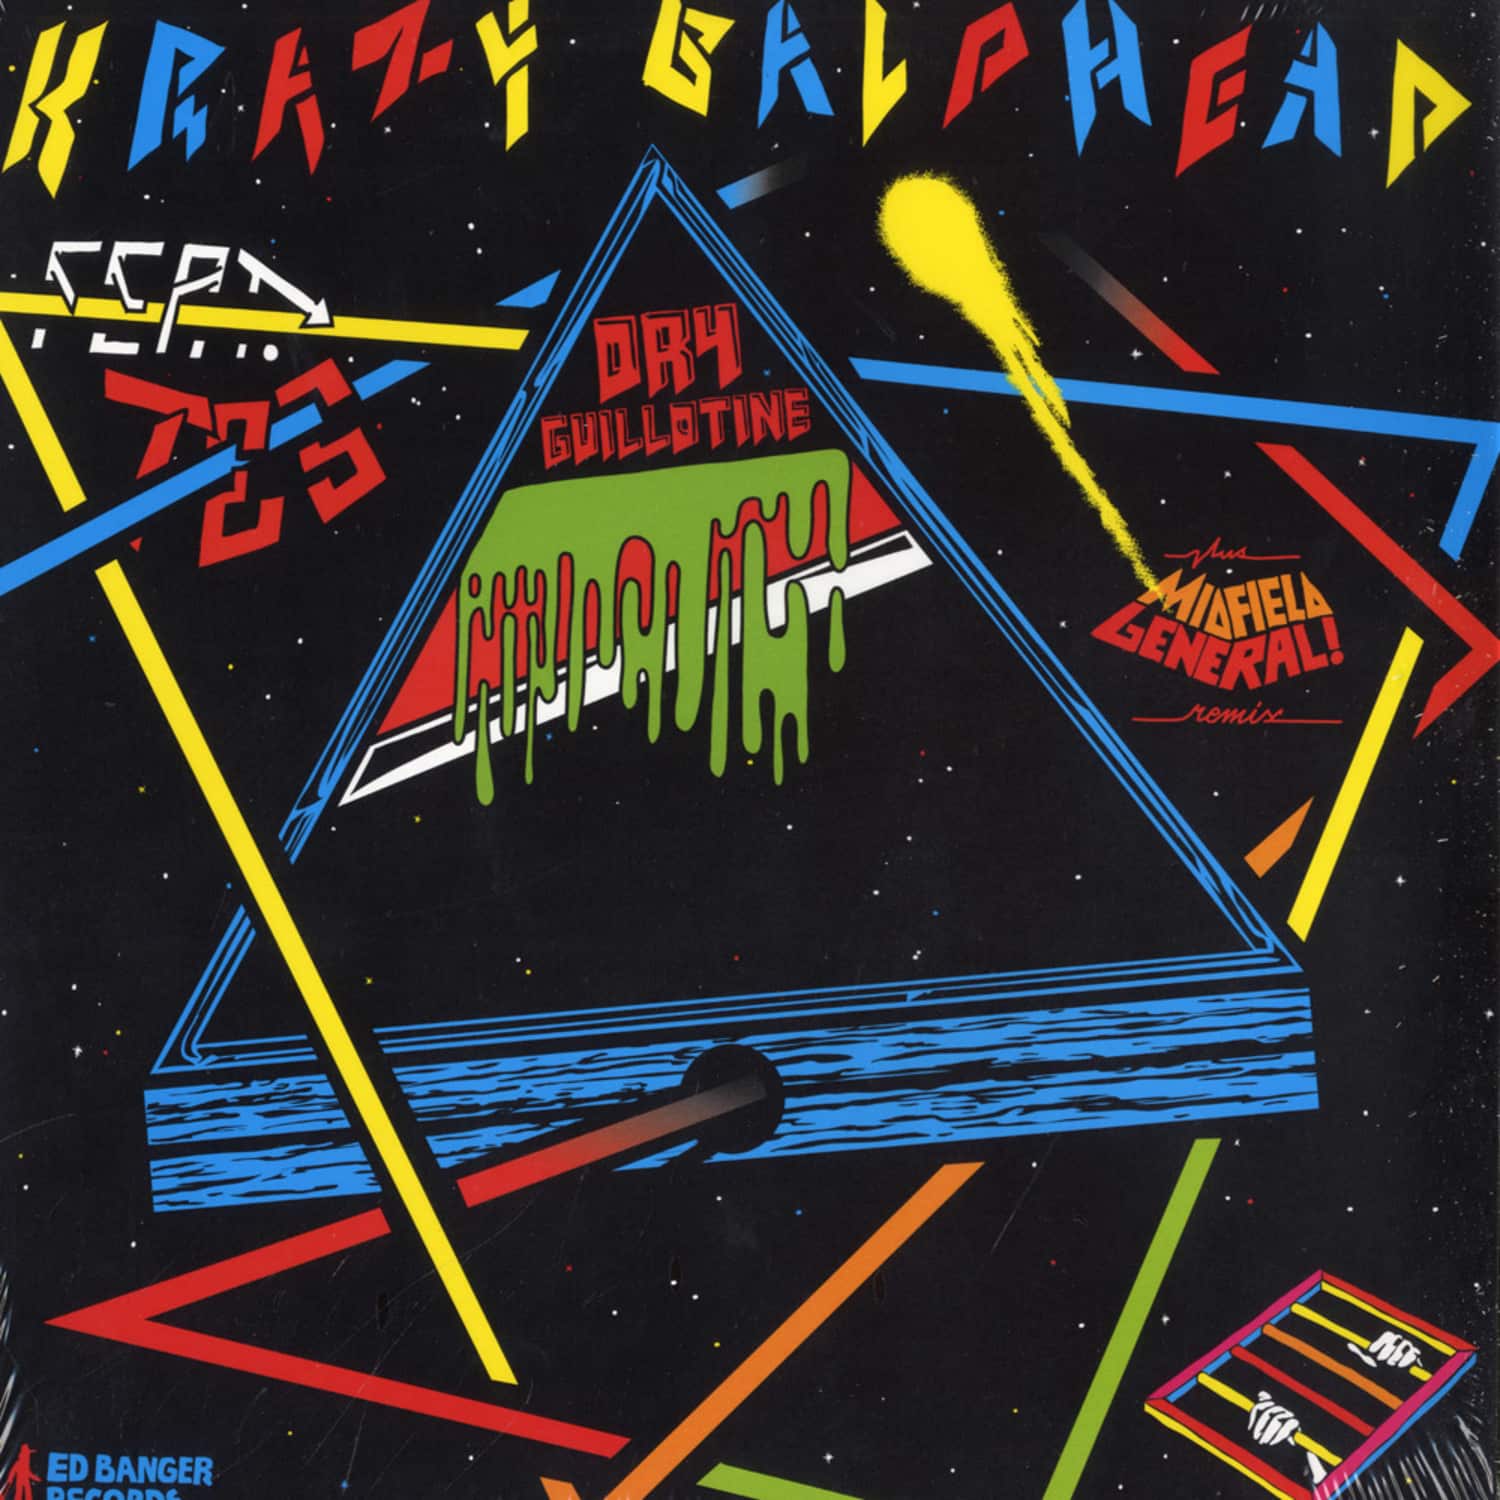 Krazy Baldhead - DRY GUILLOTINE EP